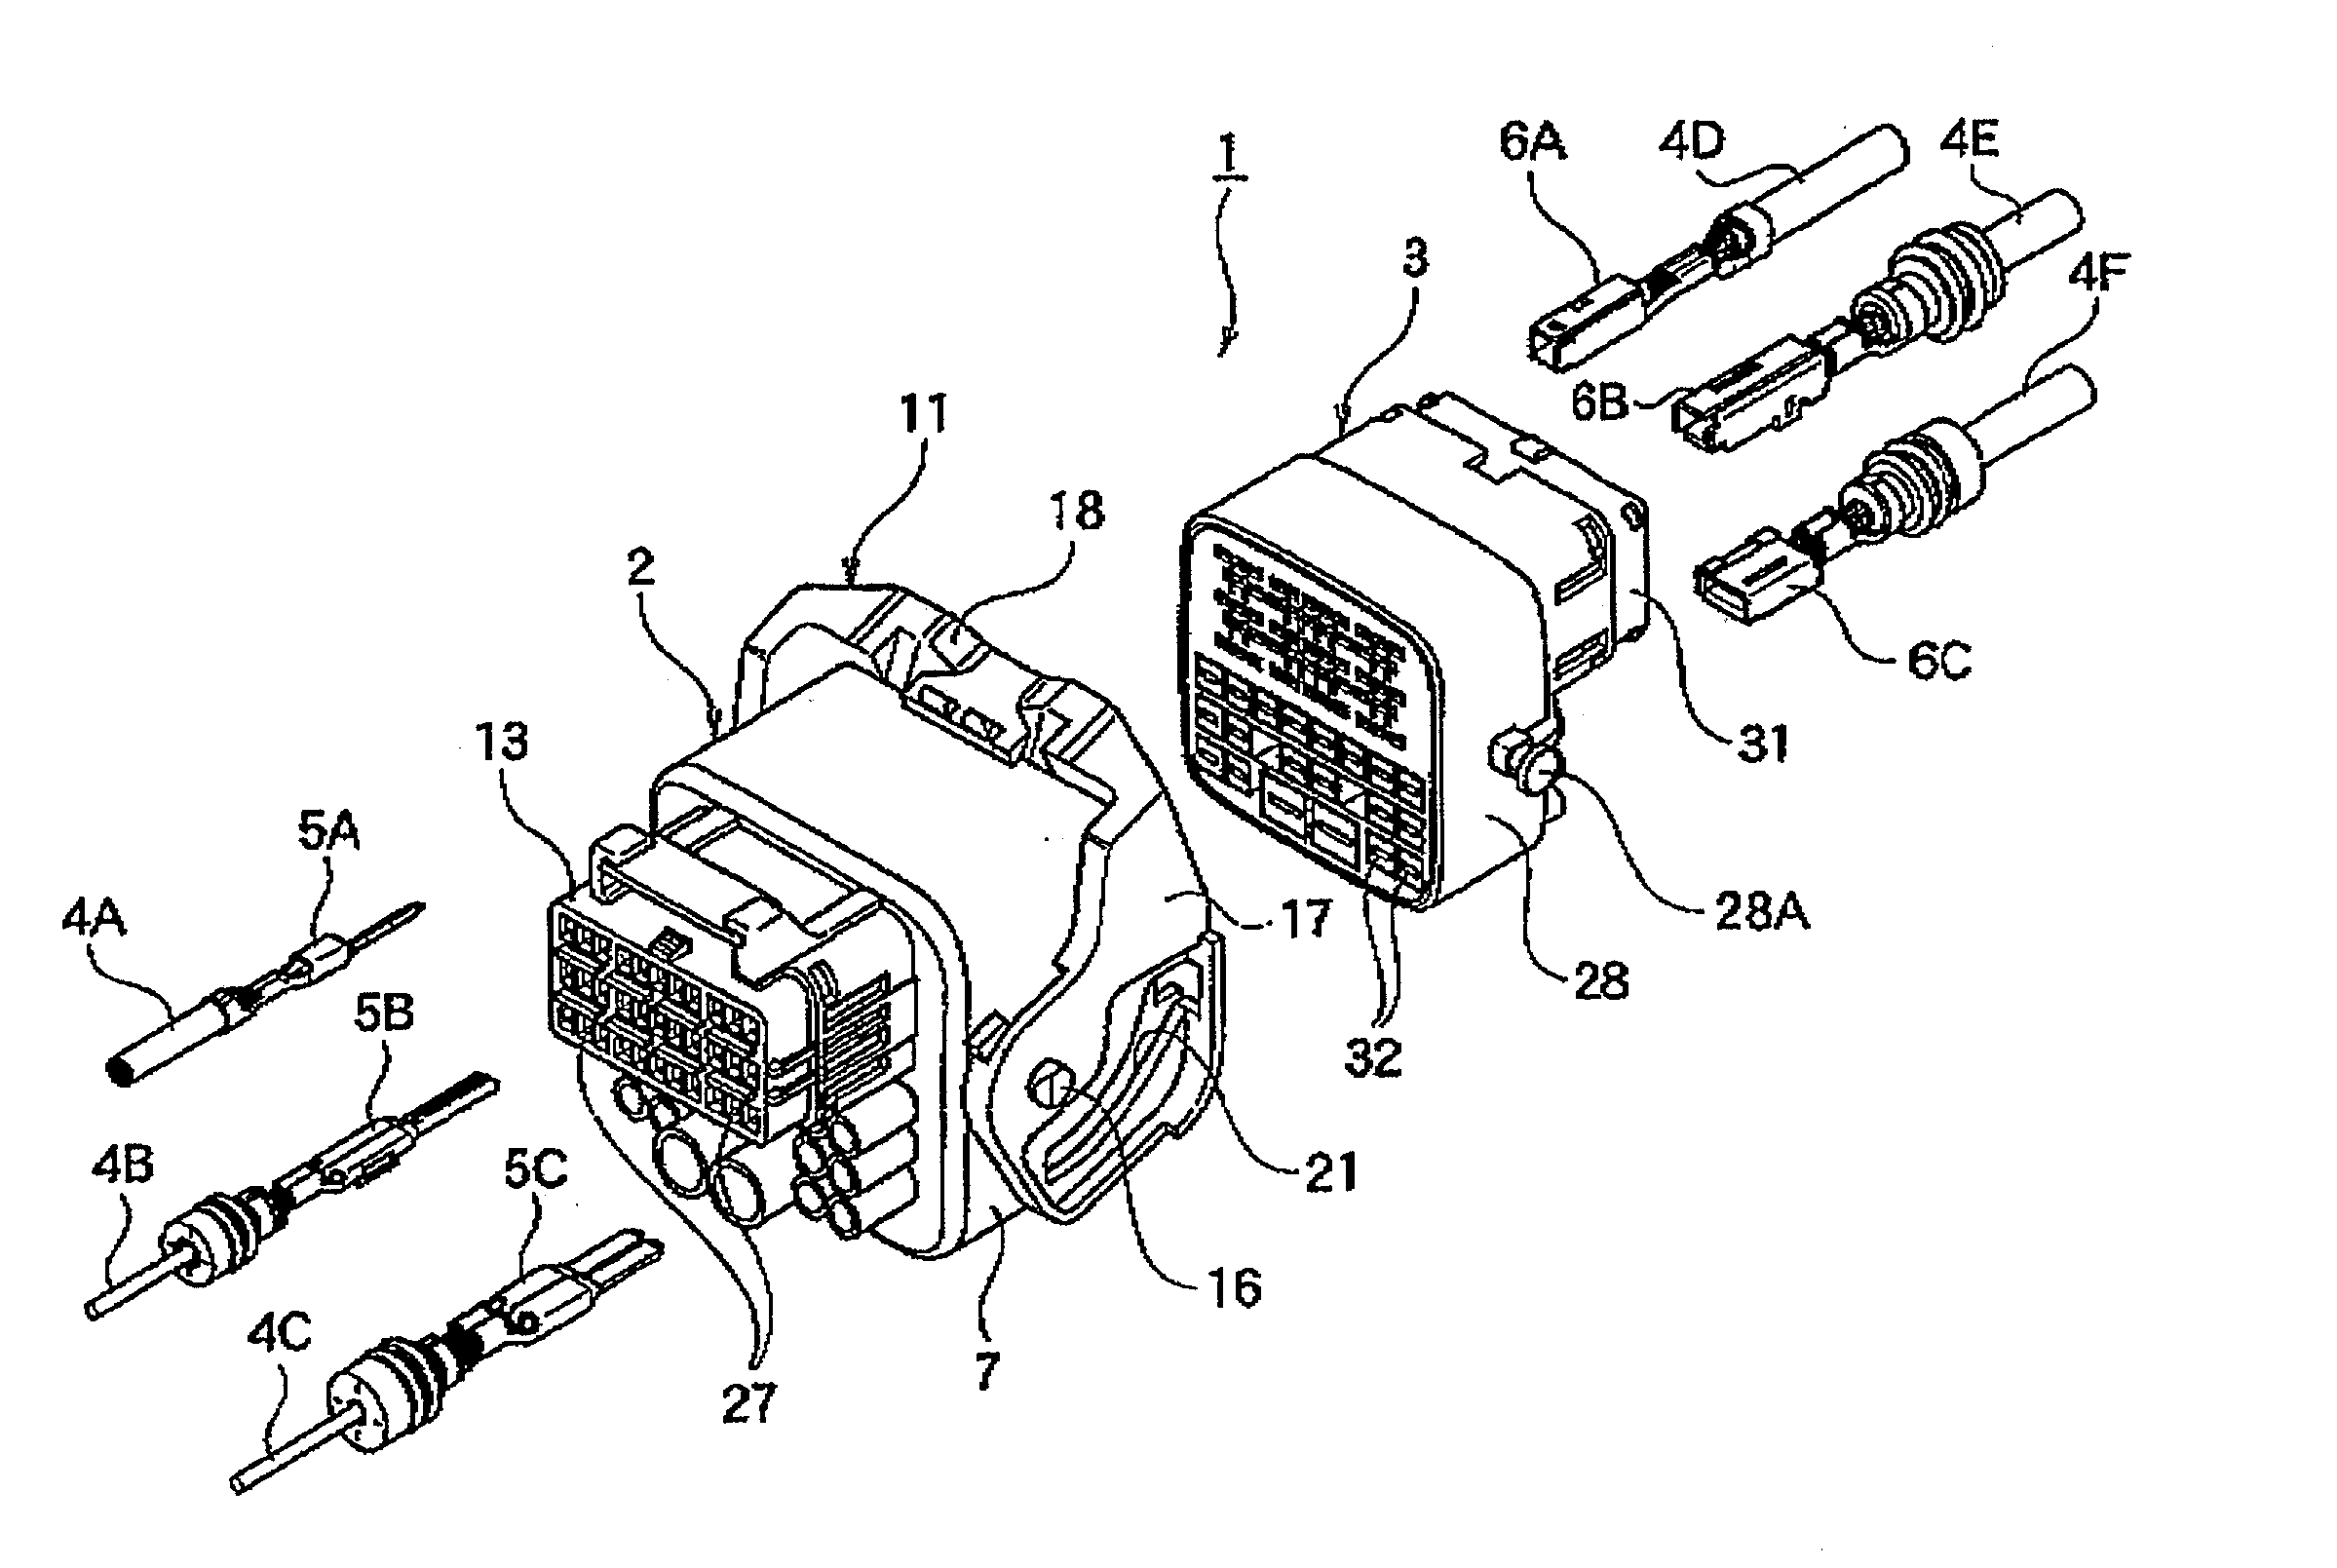 Waterproof connector and method of inserting terminals in waterproof connector